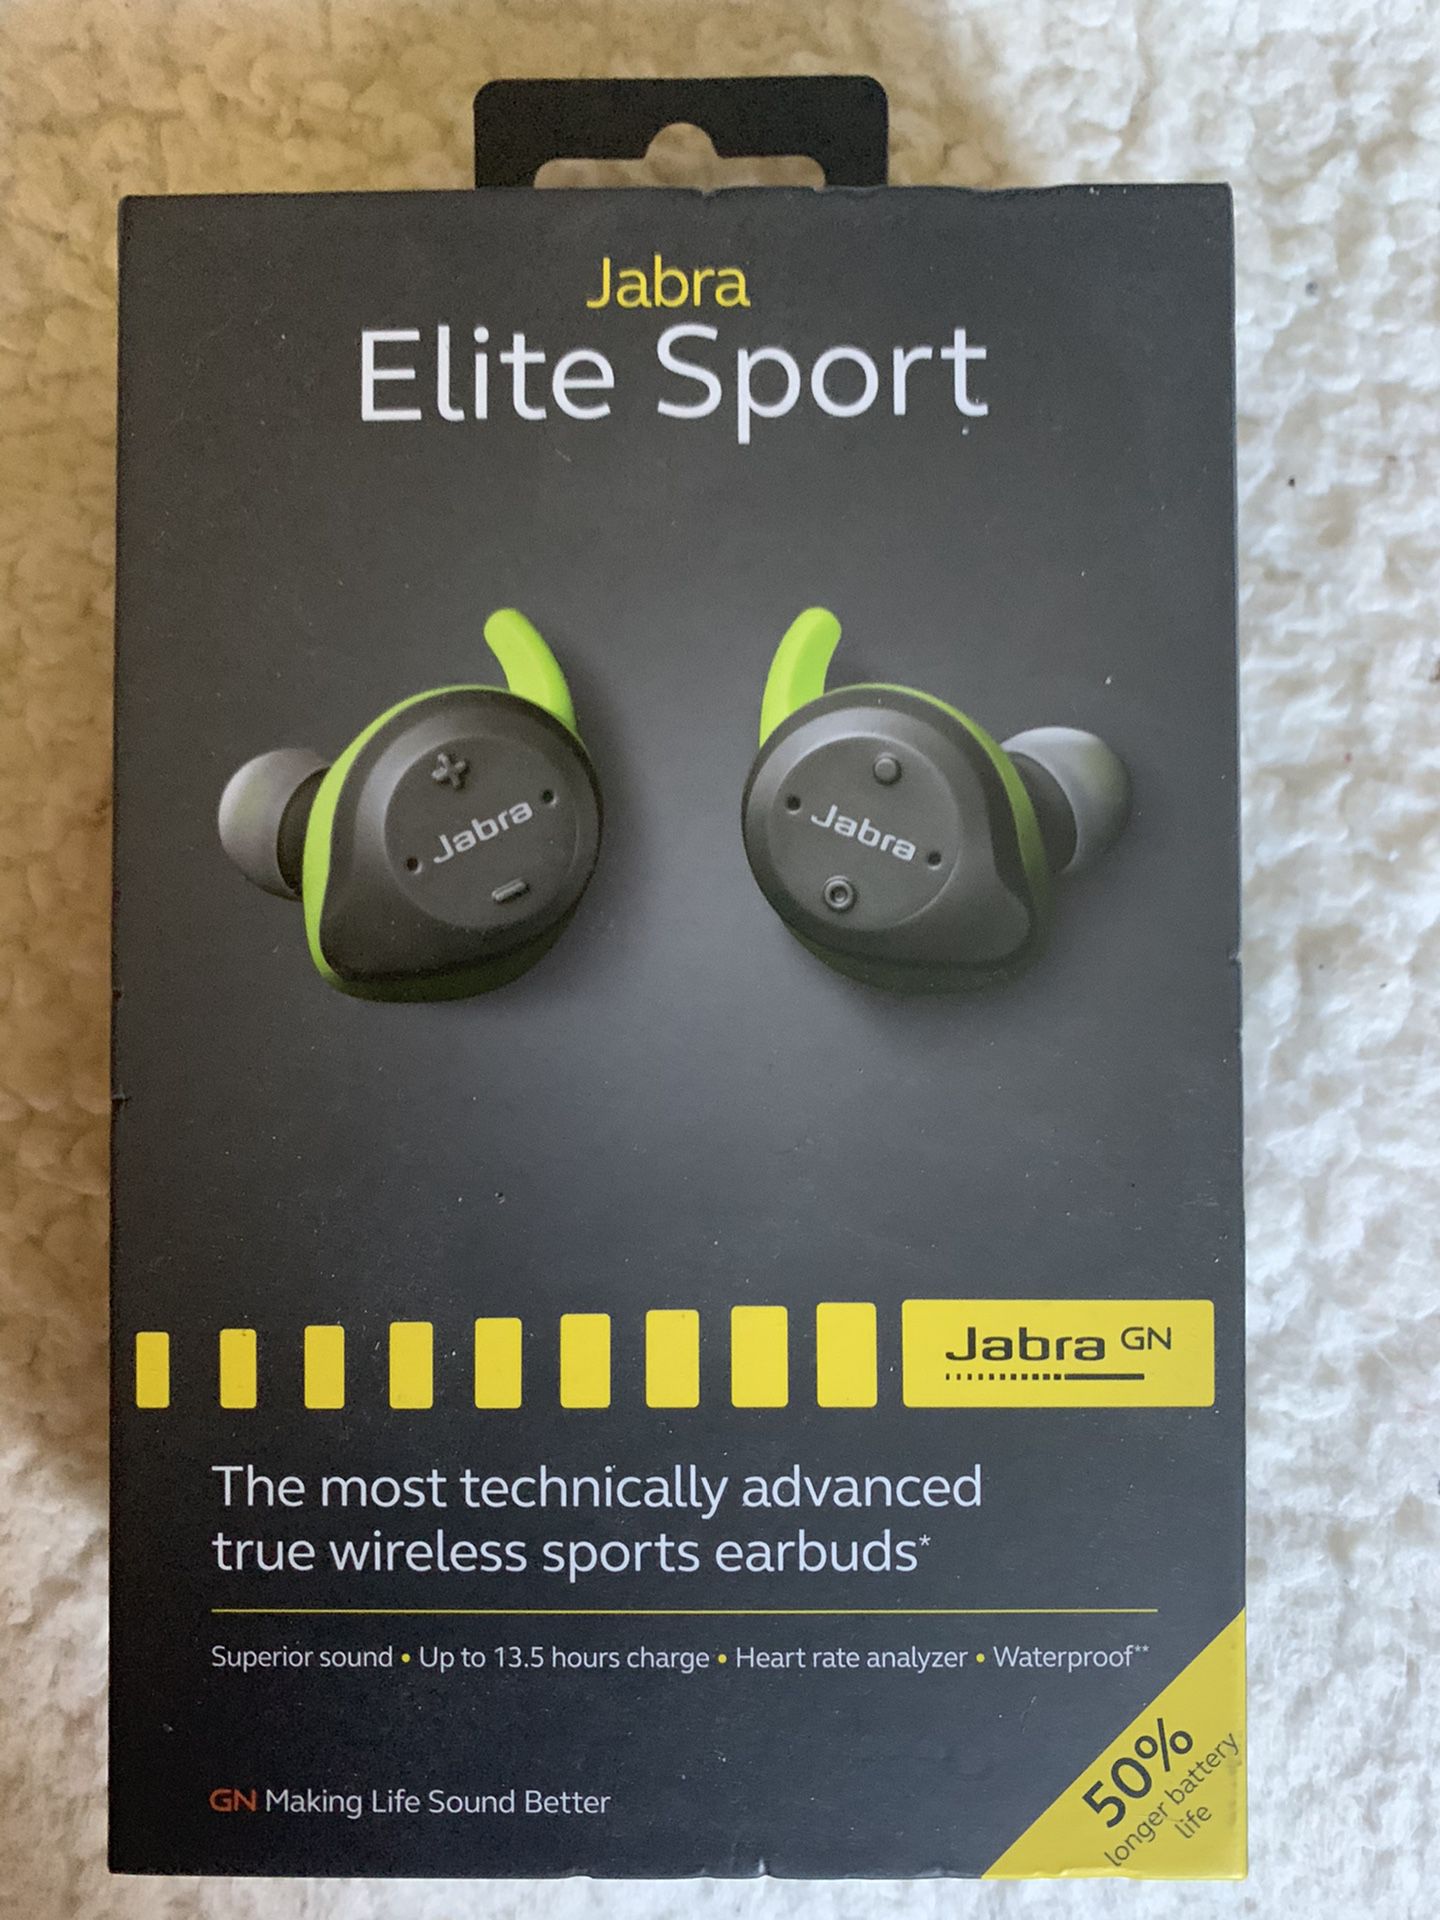 Jabra Elite Sport wireless sports earbuds